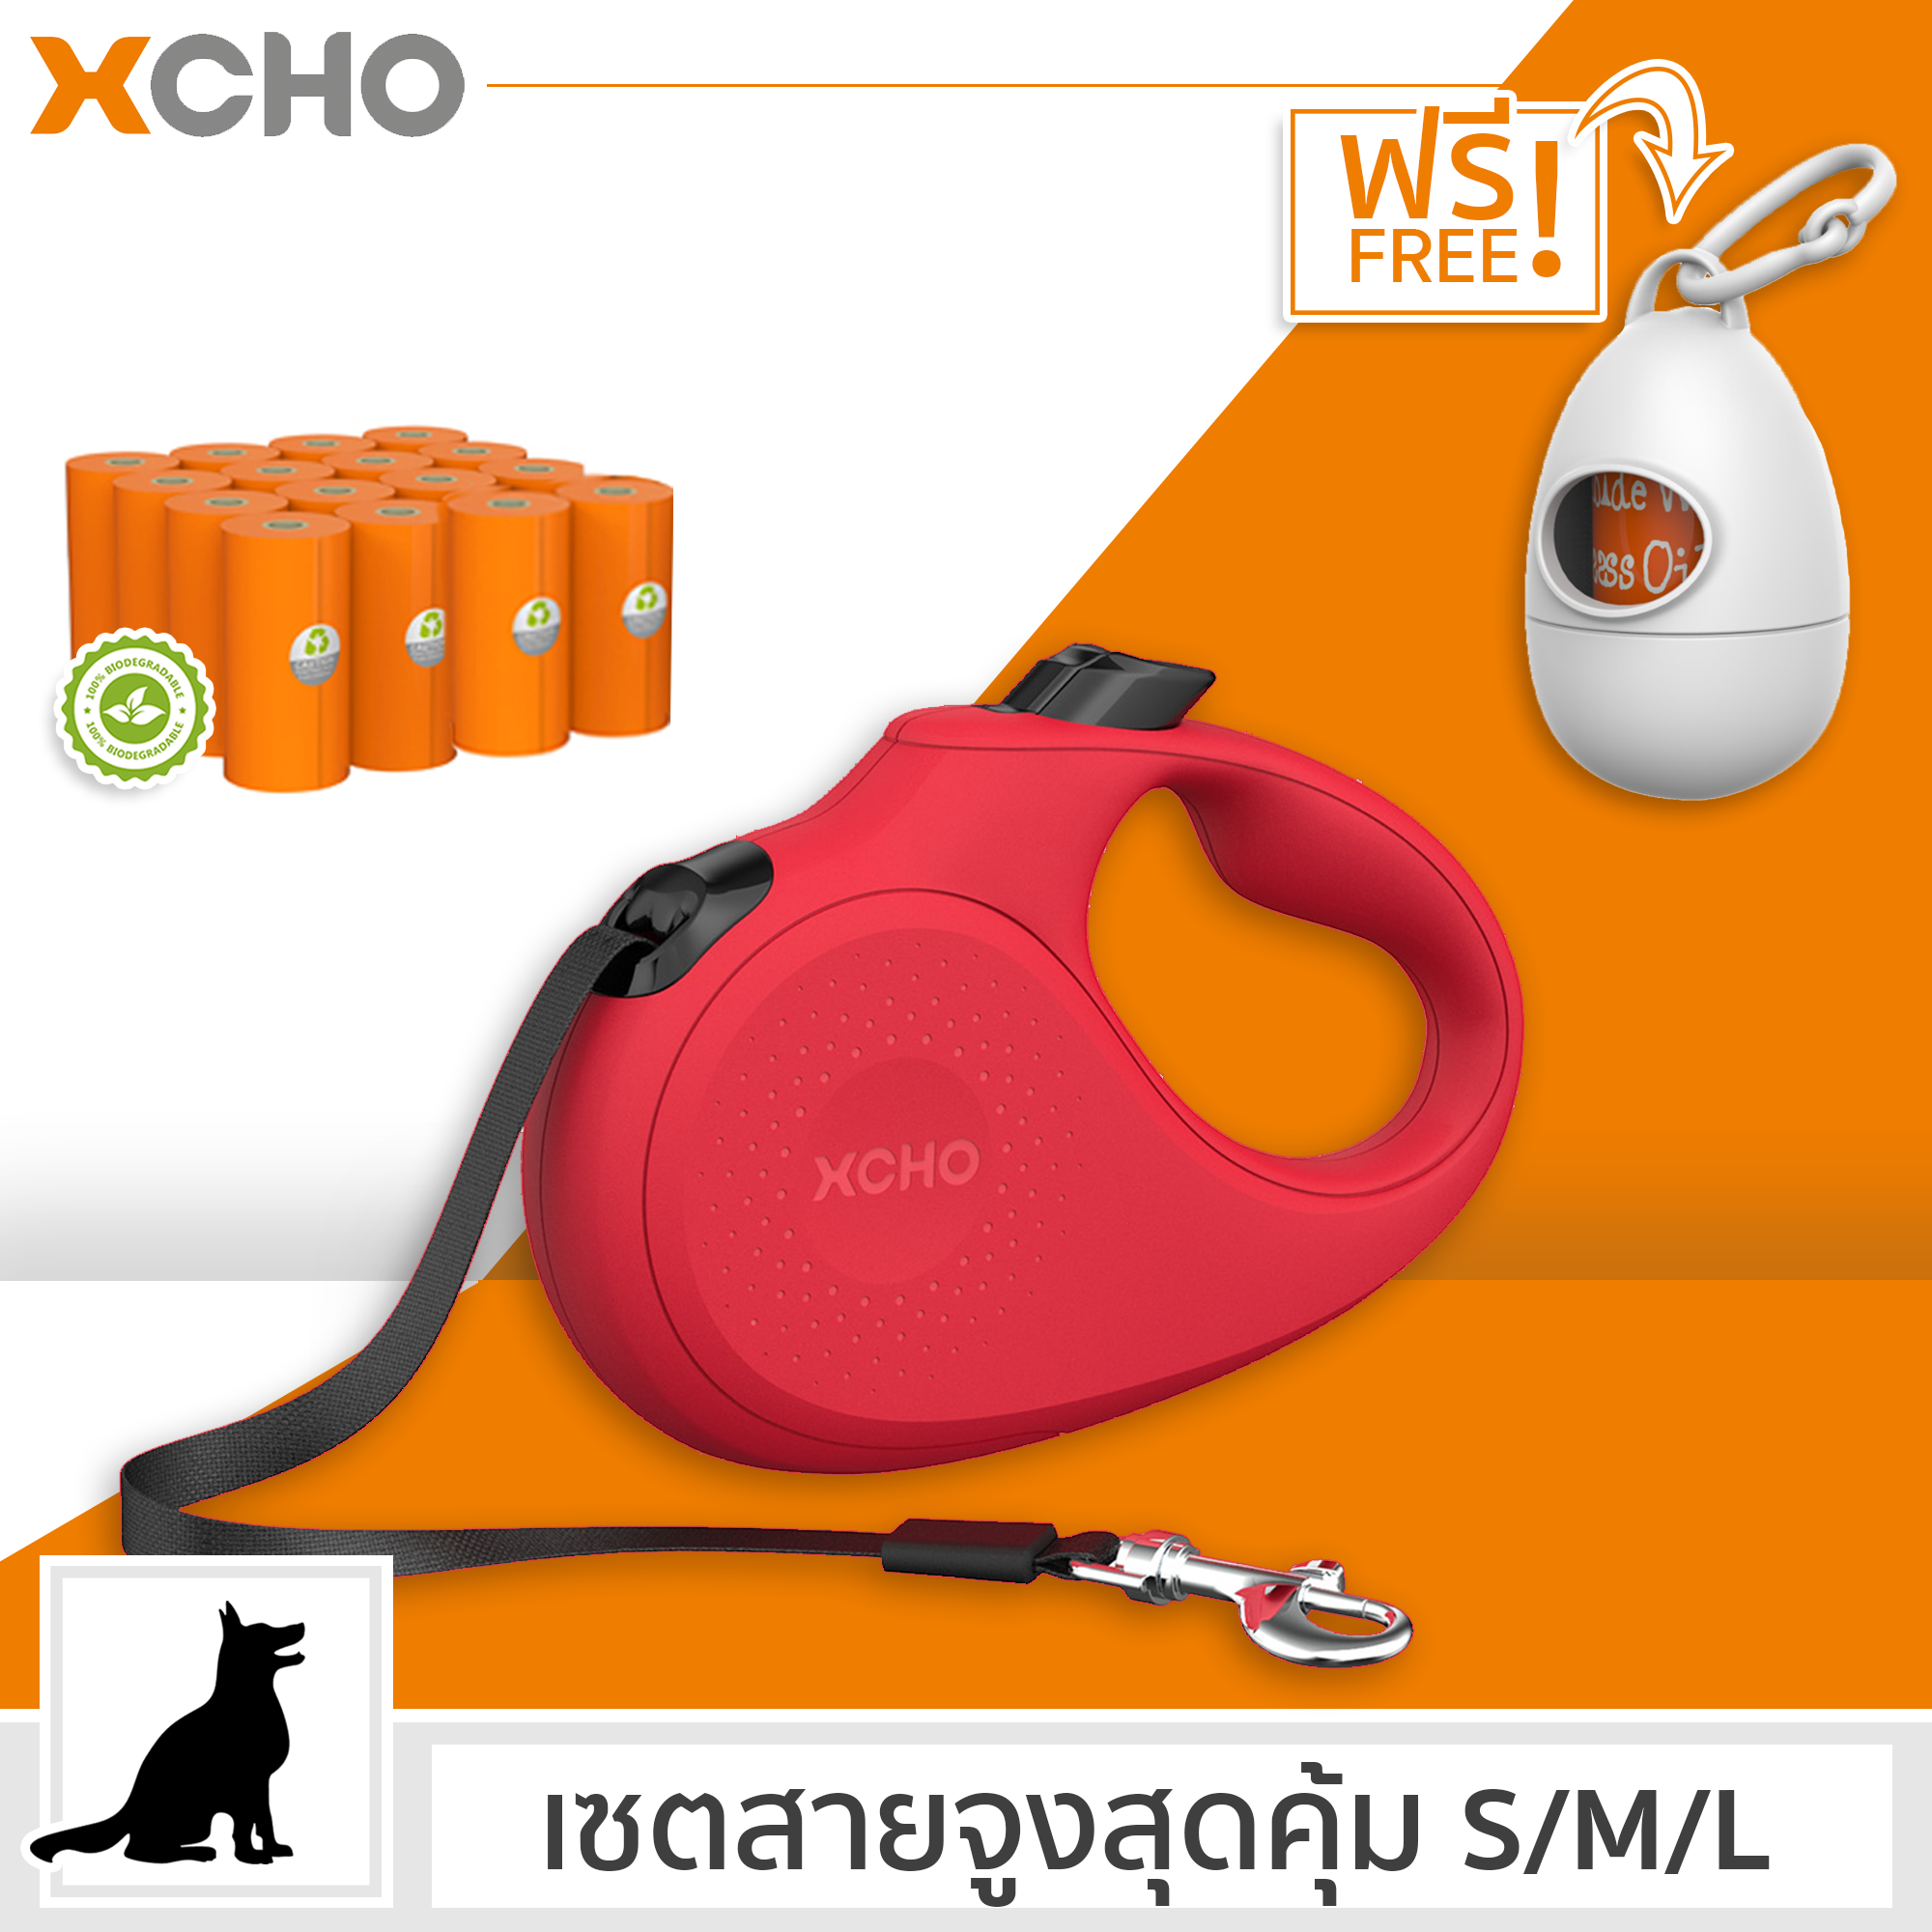 XCHO เซตสายจูงสปริง XS S M L สุดคุ้มพร้อแบบพกพา สำหรับสุนัขและแมวมถุง 20 ม้วน ฟรี ตลับเก็บมูล CleverPet